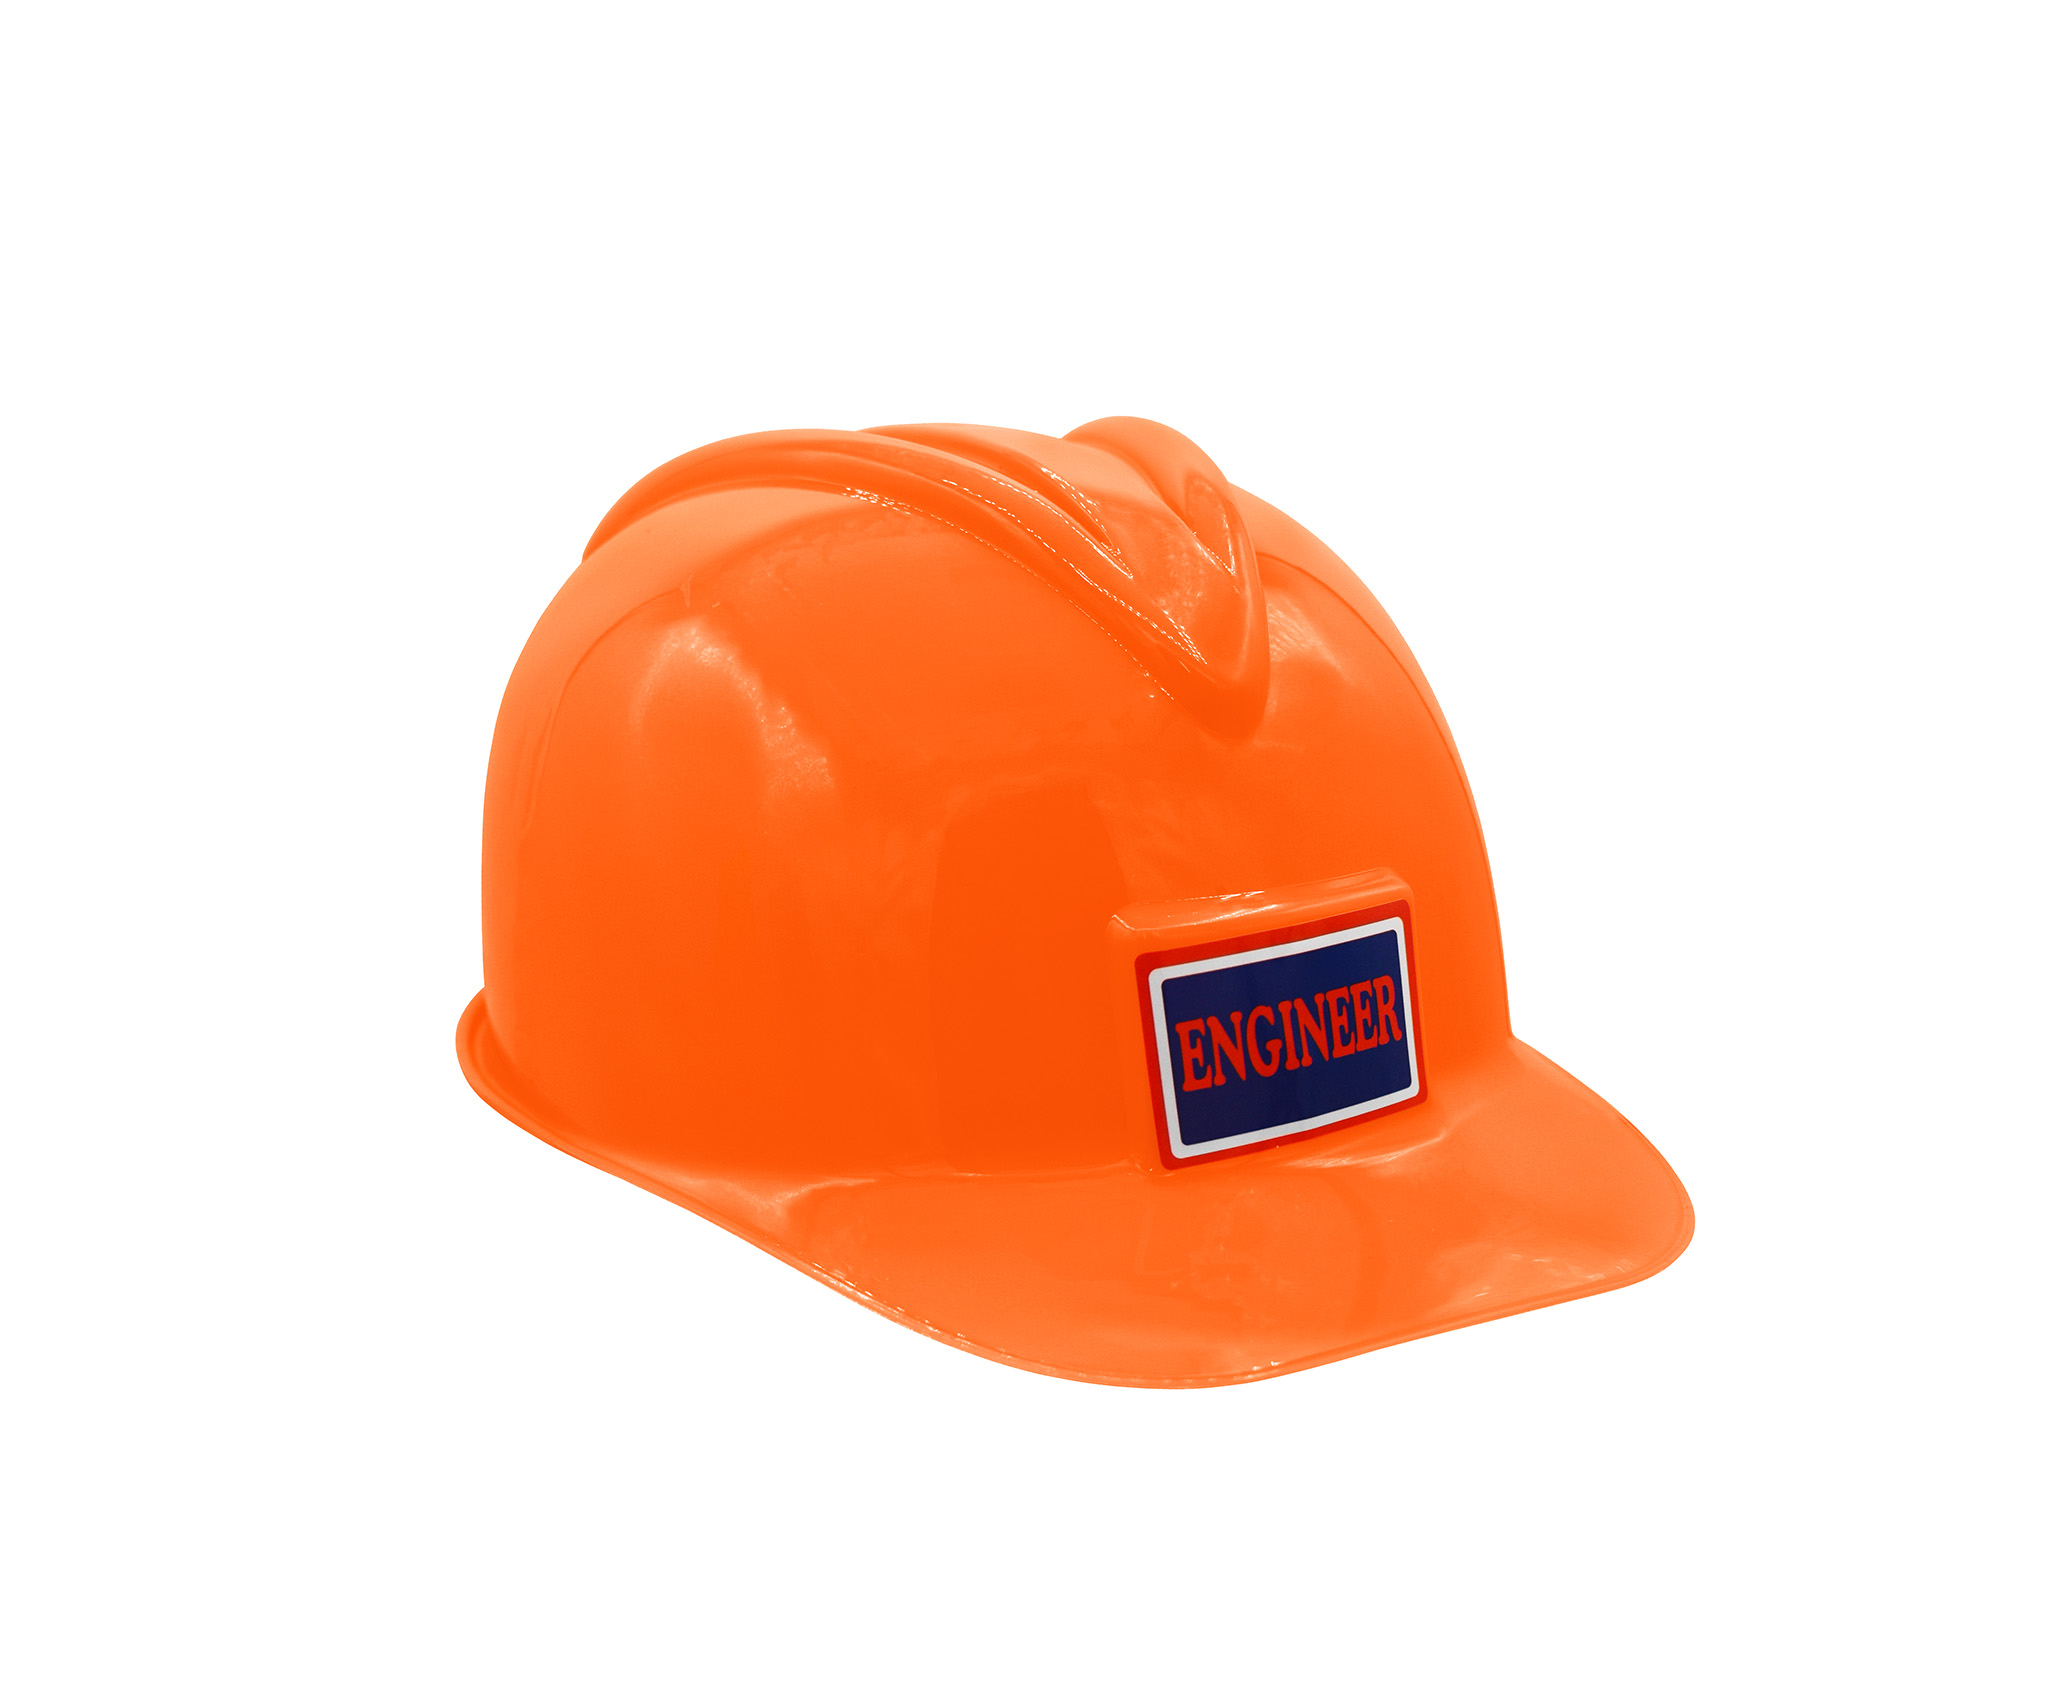 Nicky Bigs Novelties Adult Child Kids Deluxe Construction Helmet Hard Hat Yellow Miner Costume Toy